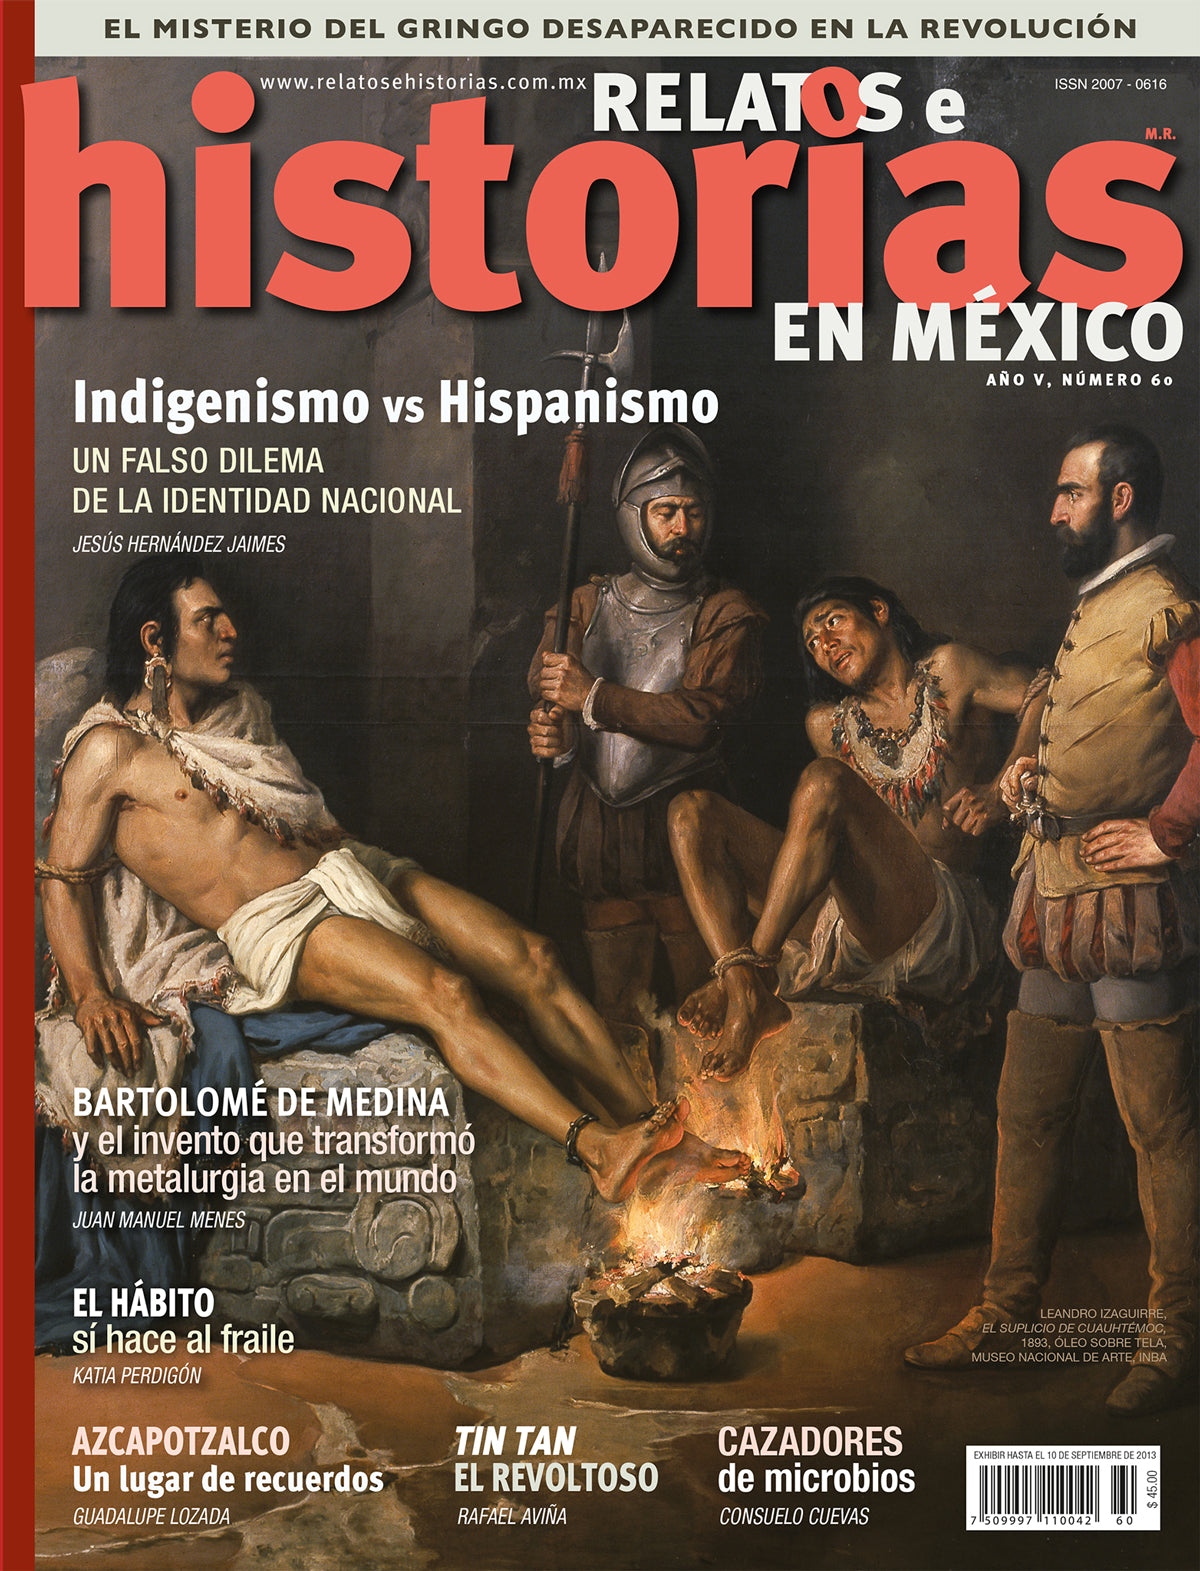 Indigenismo vs. hispanismo